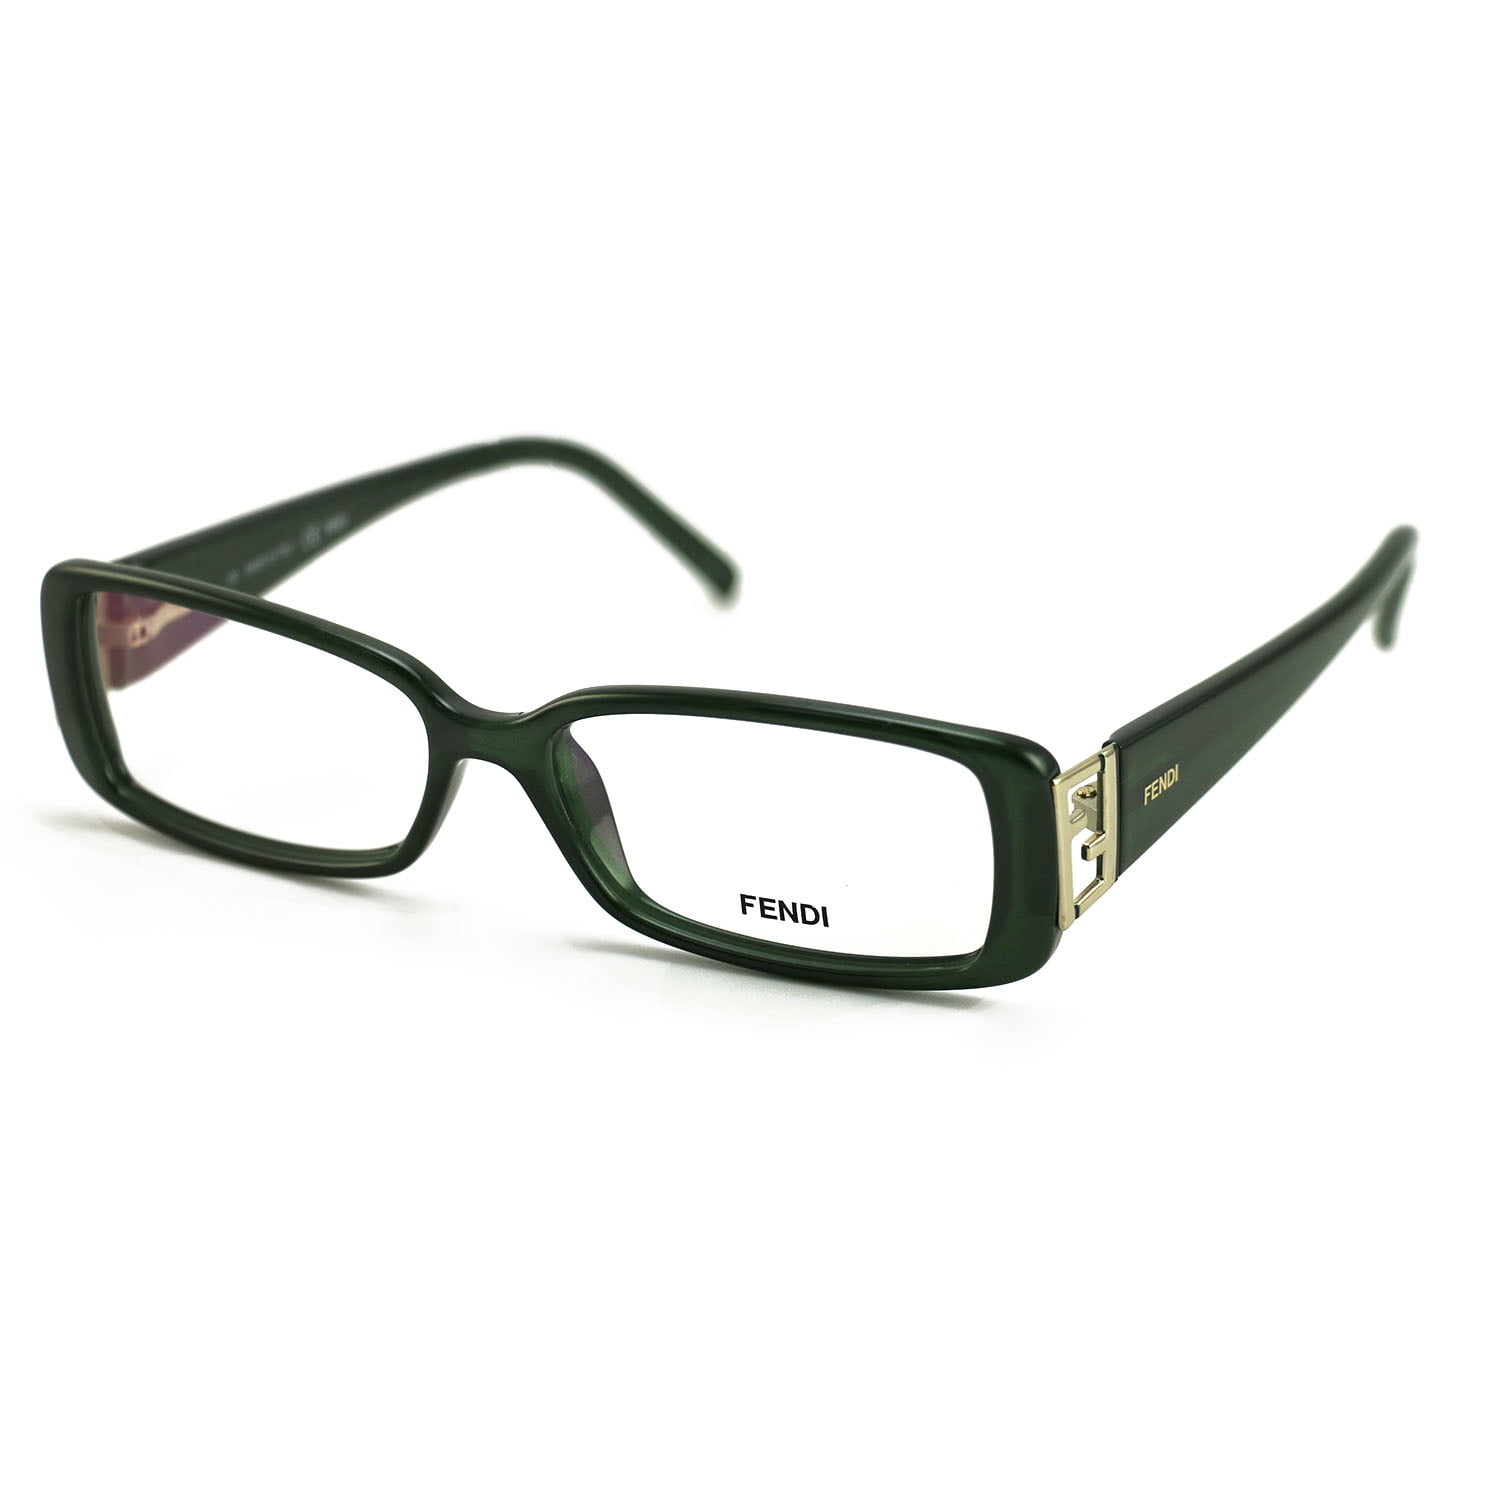 Black D-frame acetate glasses, Fendi Eyewear